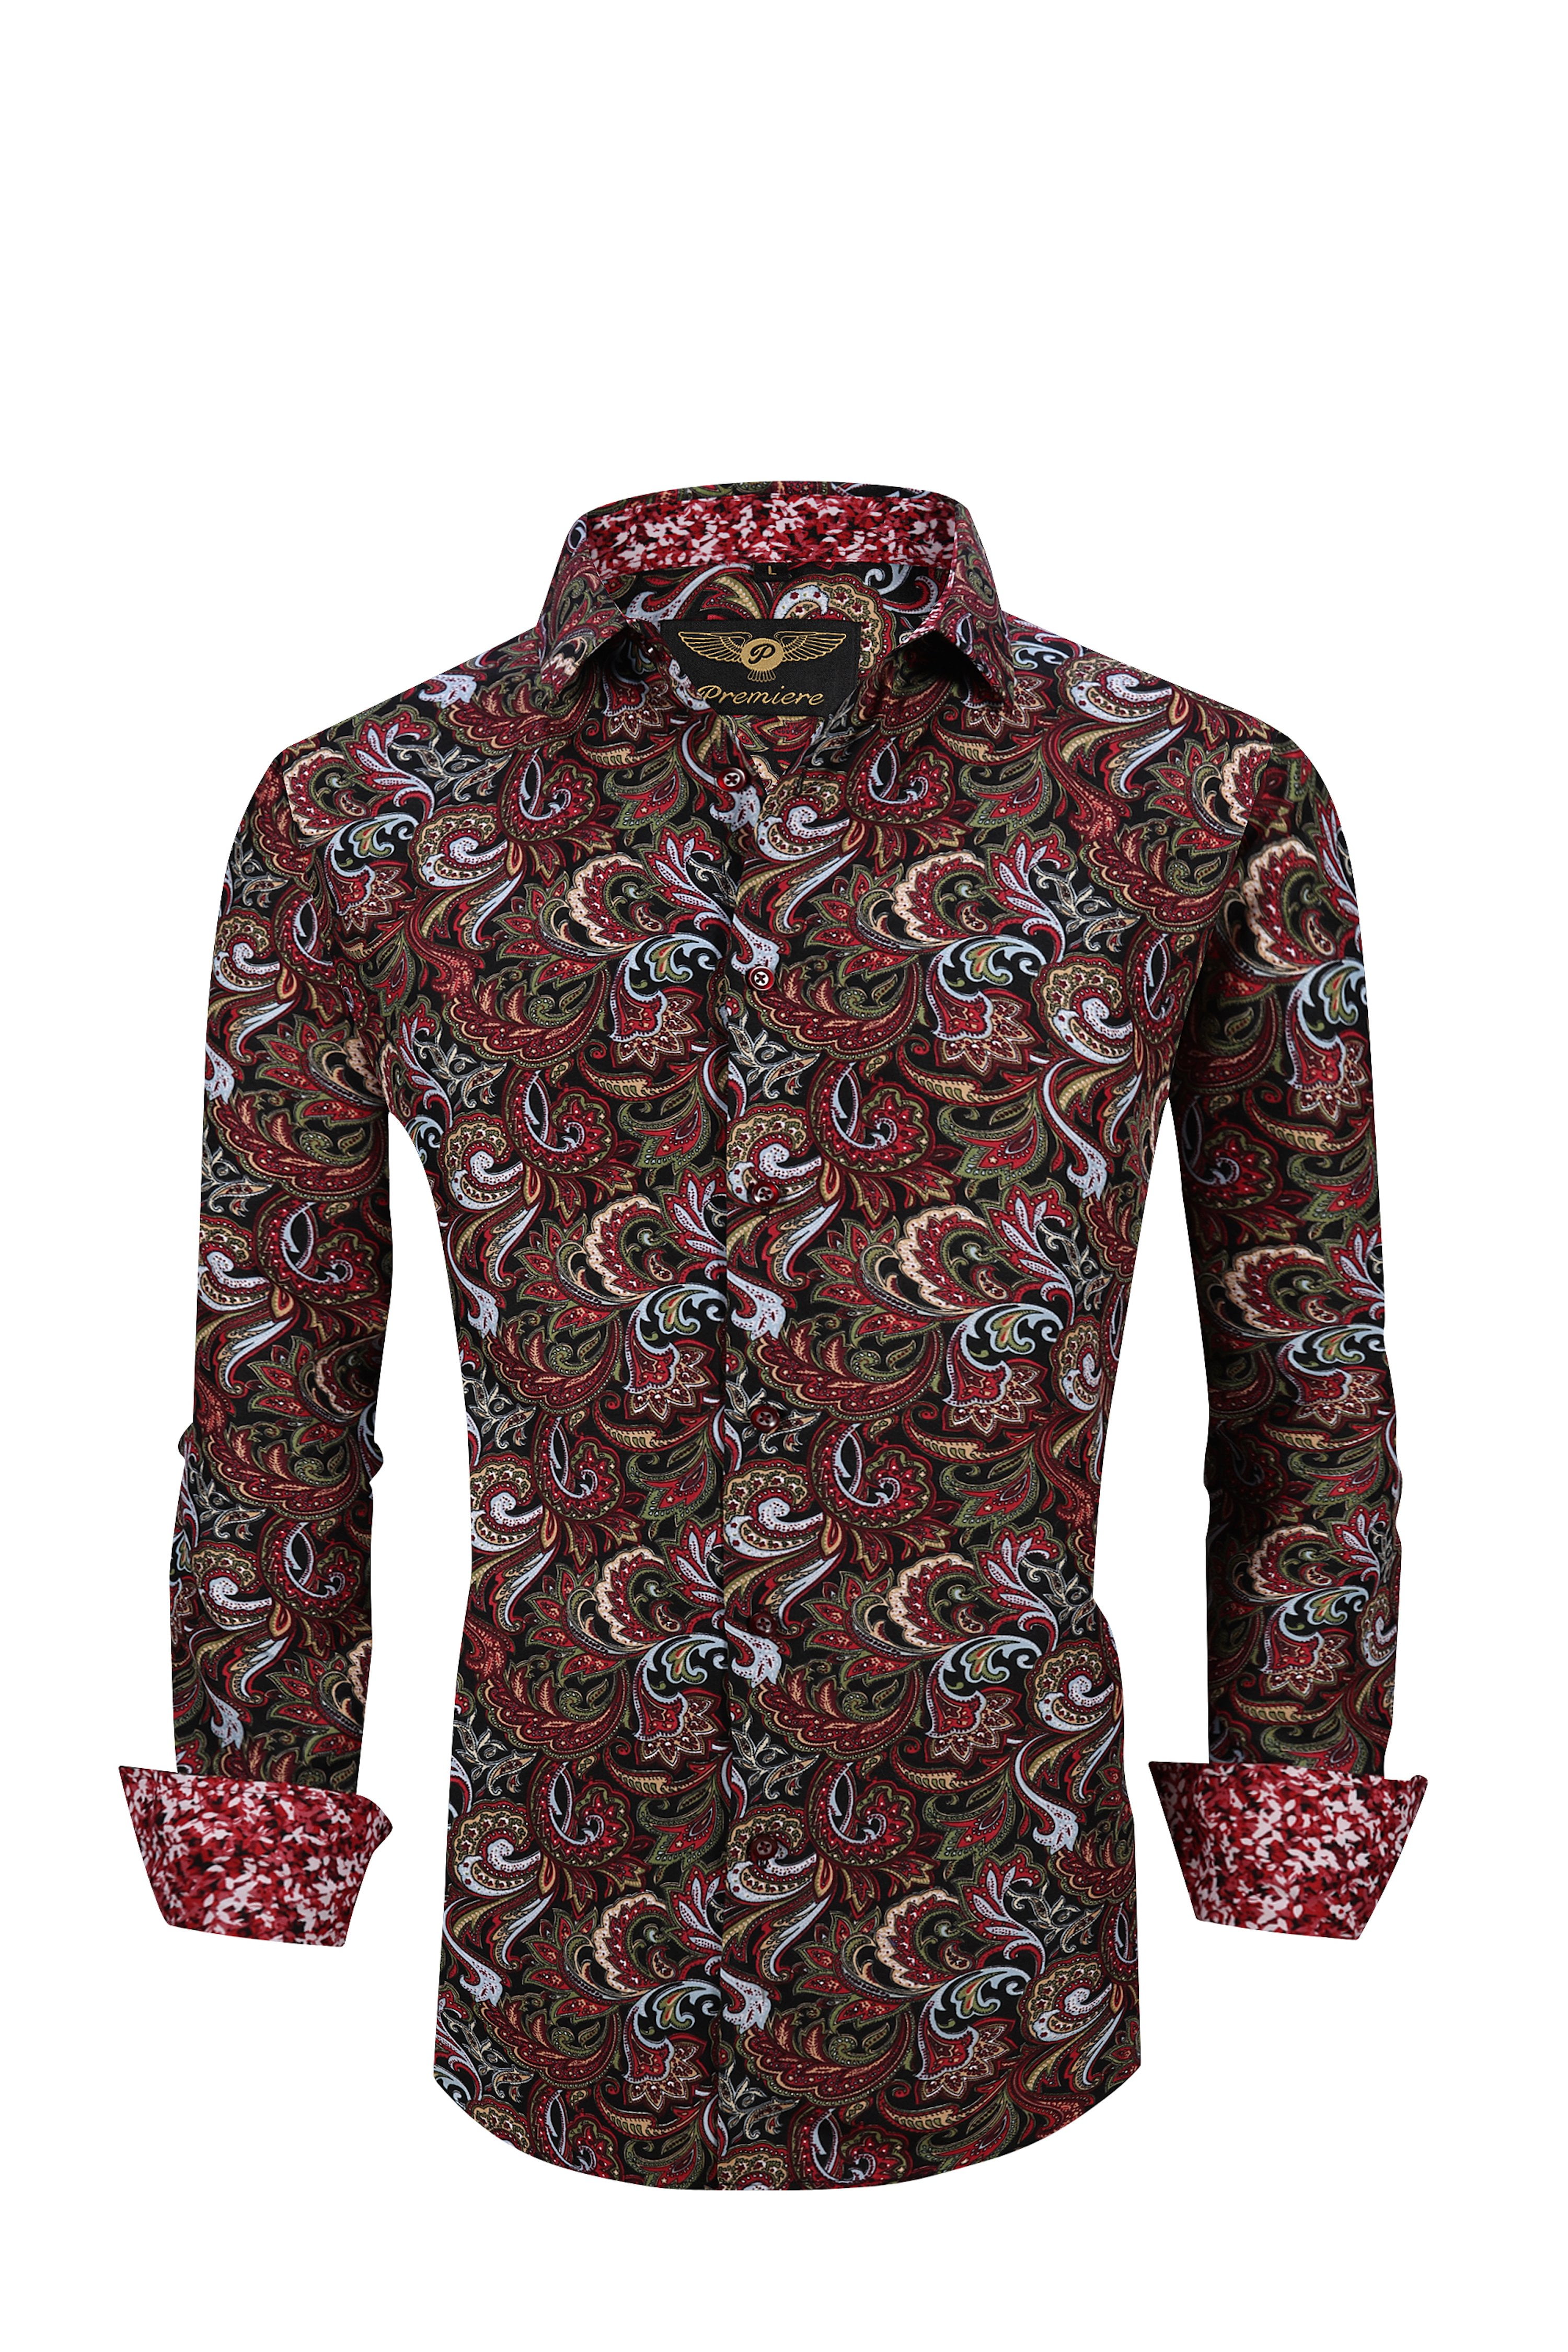 Premiere Men's Colorful Paisley Designer Fashion Dress Shirt Floral Casual Shirt Woven Long Sleeve Button Down Shirt